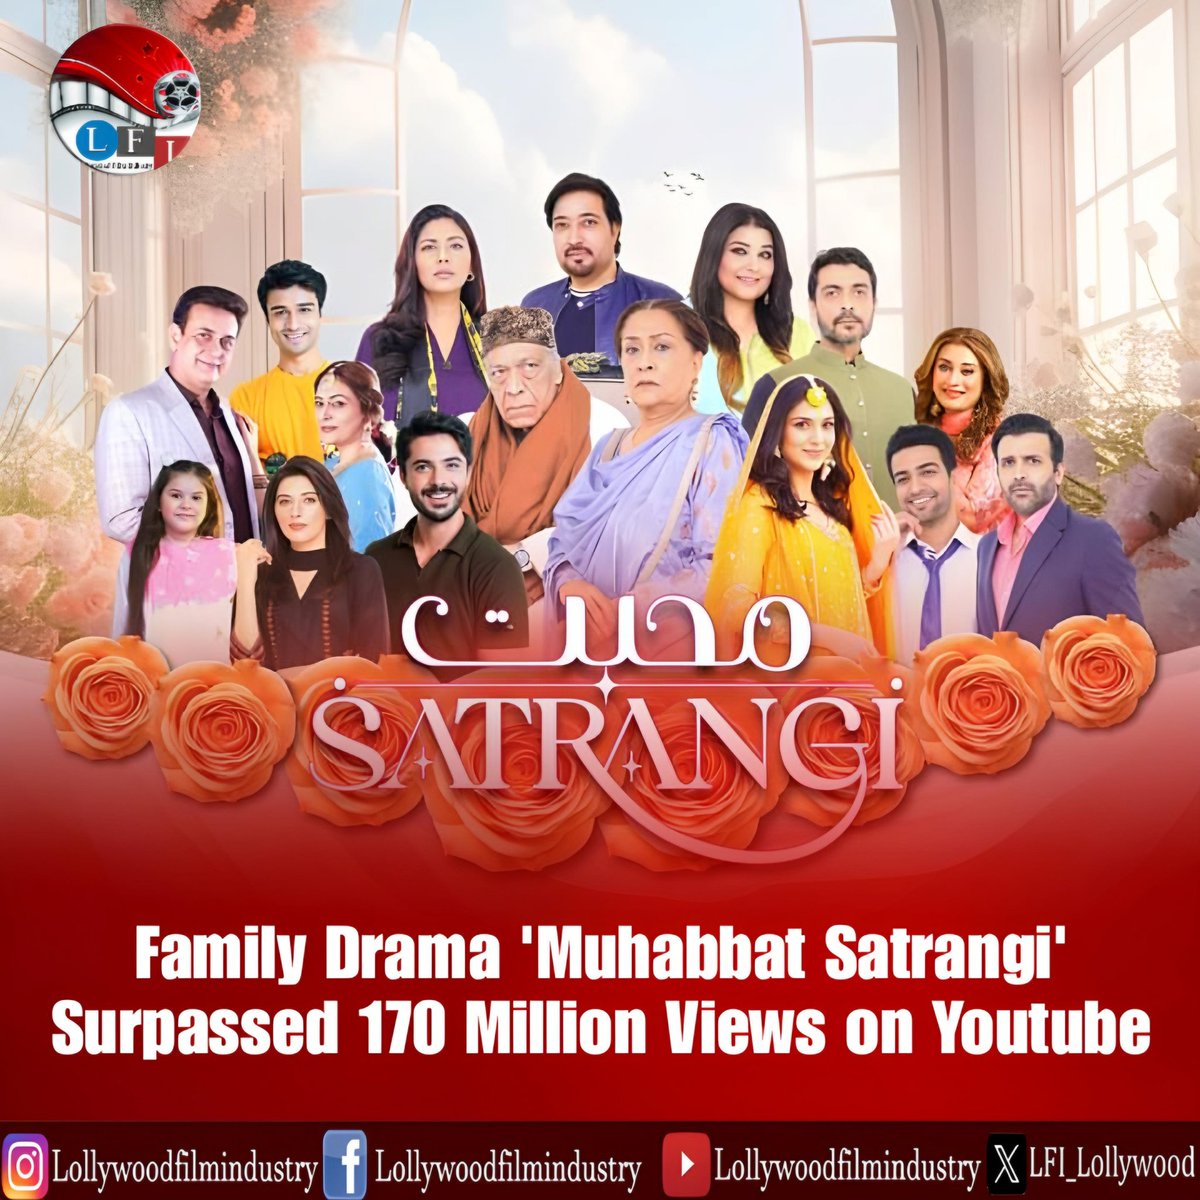 Green Entertainment's one of Premier show 'Muhabbat Satrangi' has crossed 170 Million views youtube. #muhabbatsatrangi #javeriasaud #toobasiddiqui #GreenTVEntertainment #saud #sunitamarshall #hassan #Drama #LollywoodFilmindustry